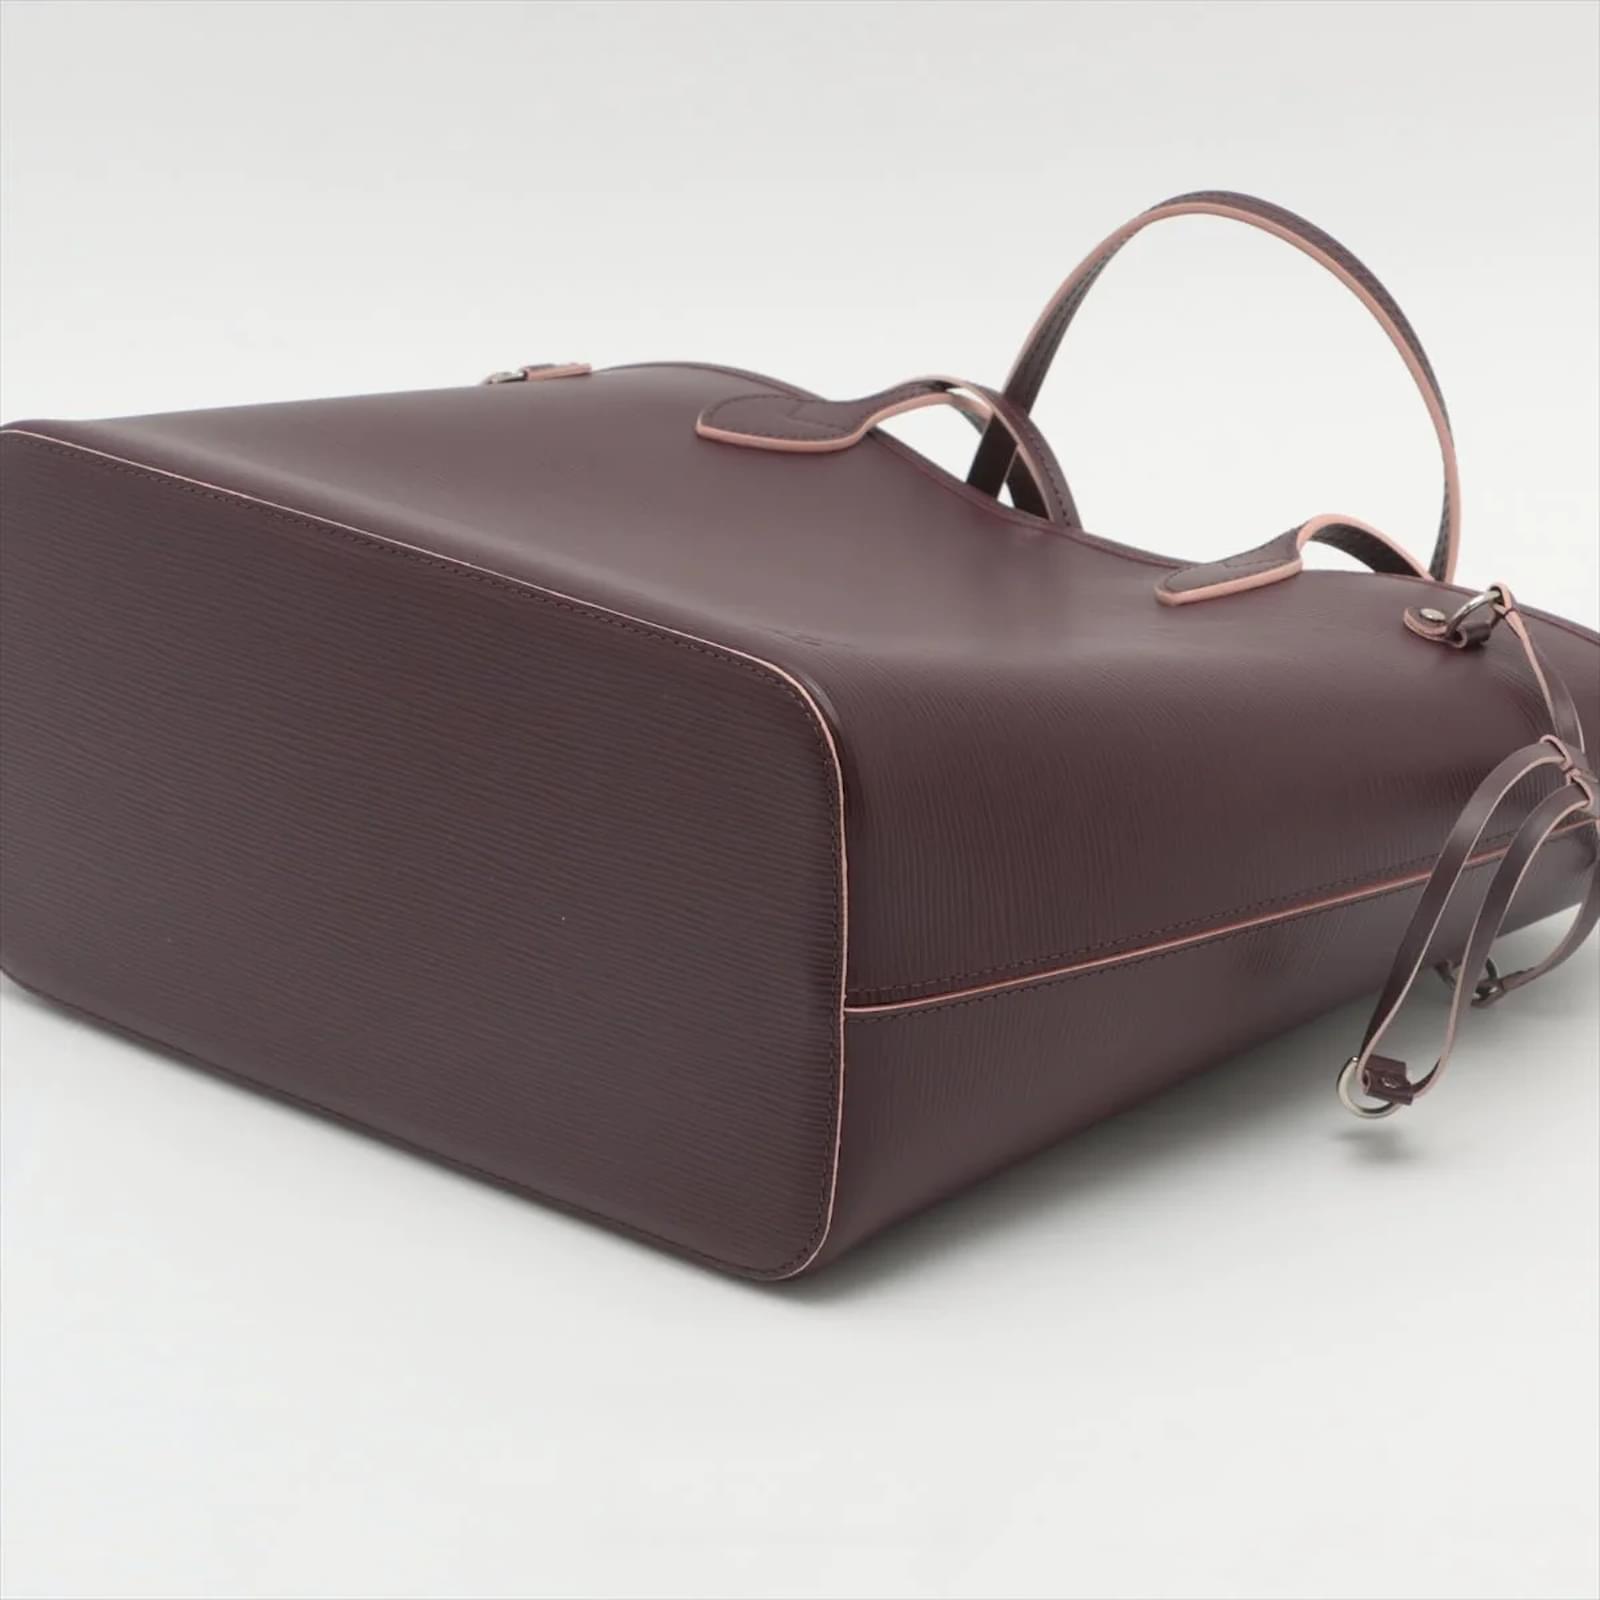 Louis Vuitton Neverfull MM Giant Monogram Bag Burgundy Limited